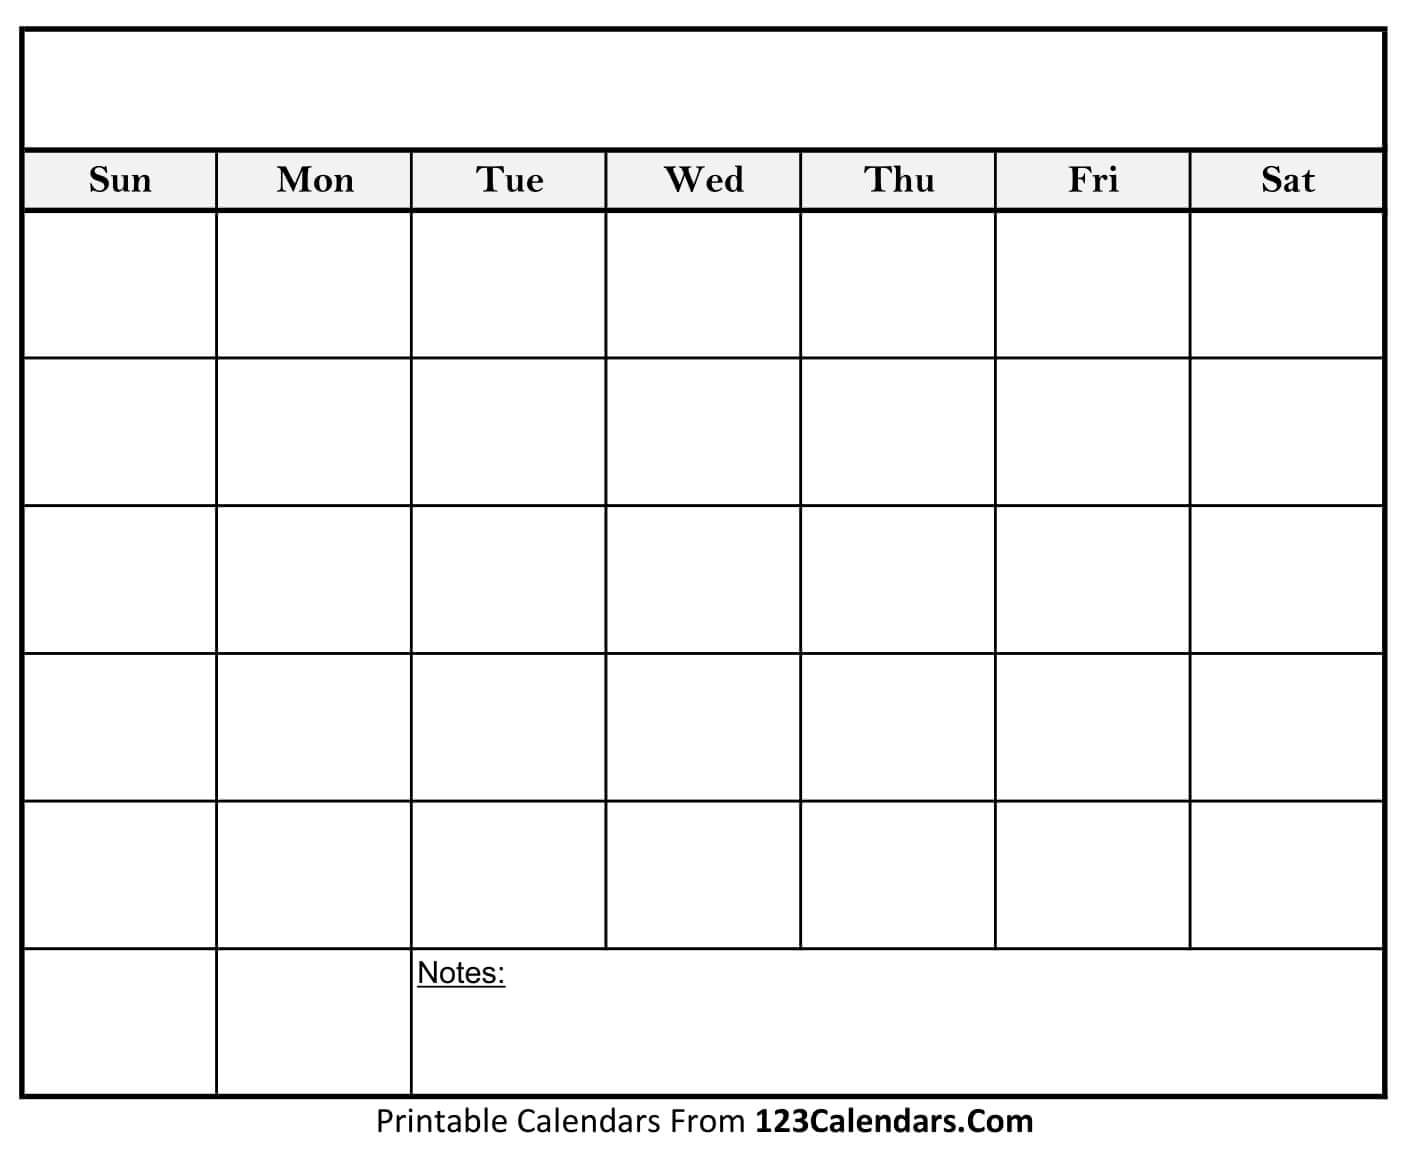 Free Printable Blank Calendar | 123Calendars Extraordinary Blank Calendar Printable To Fill In